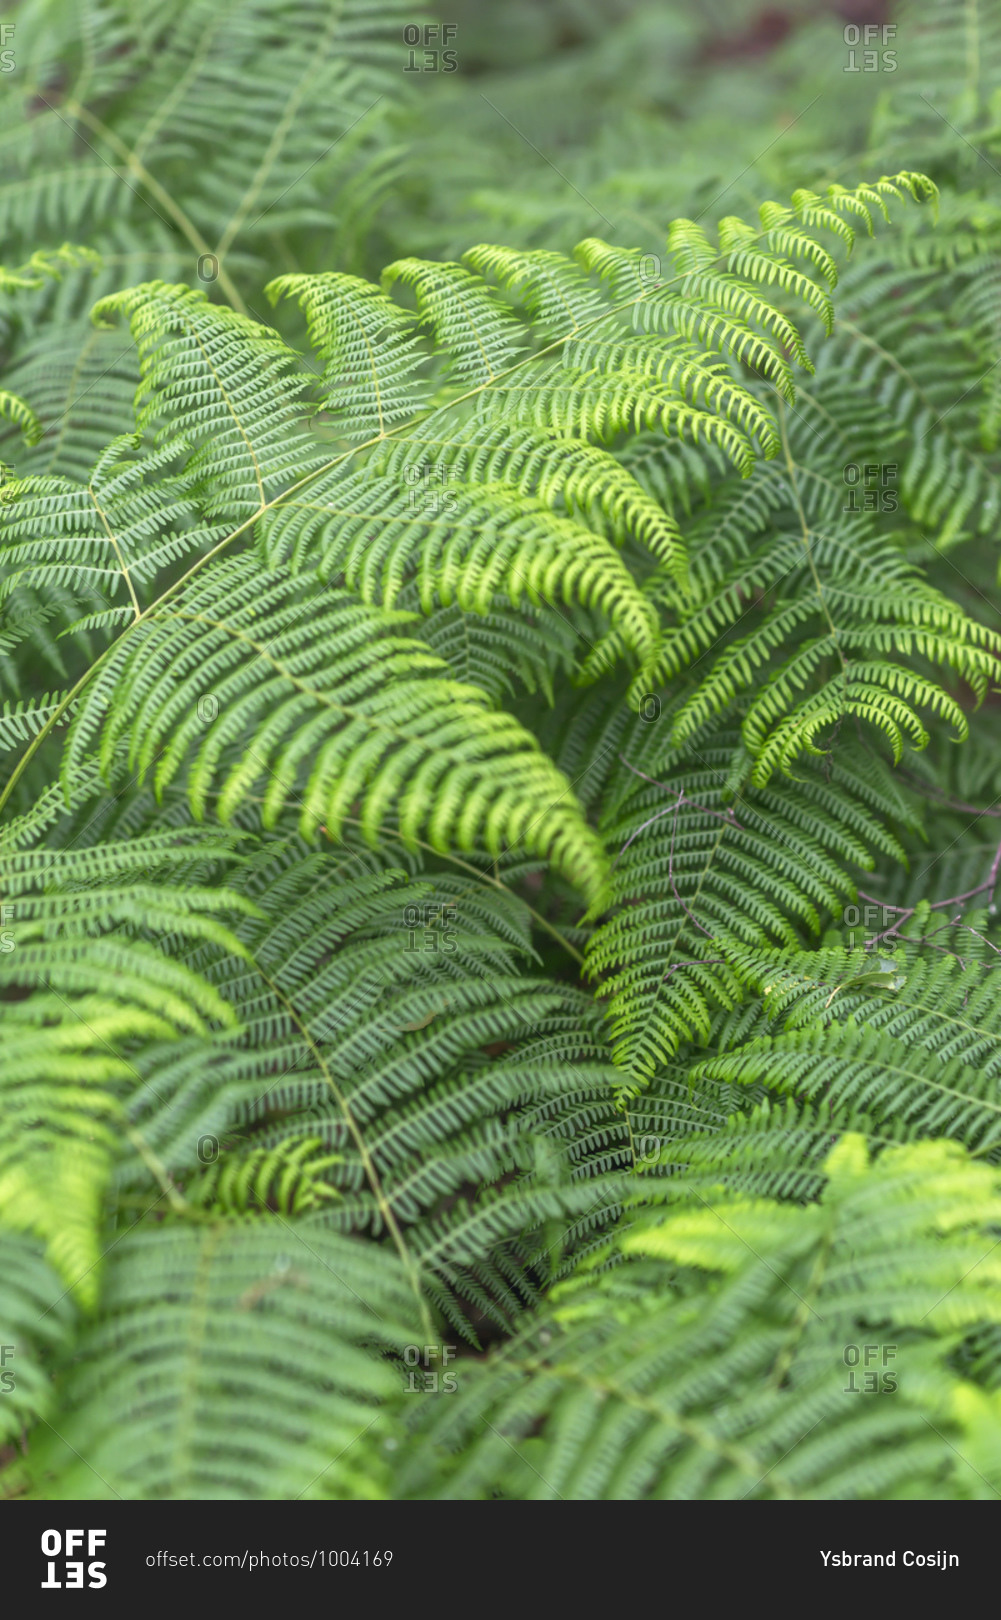 Lush verdant ferns growing in nature